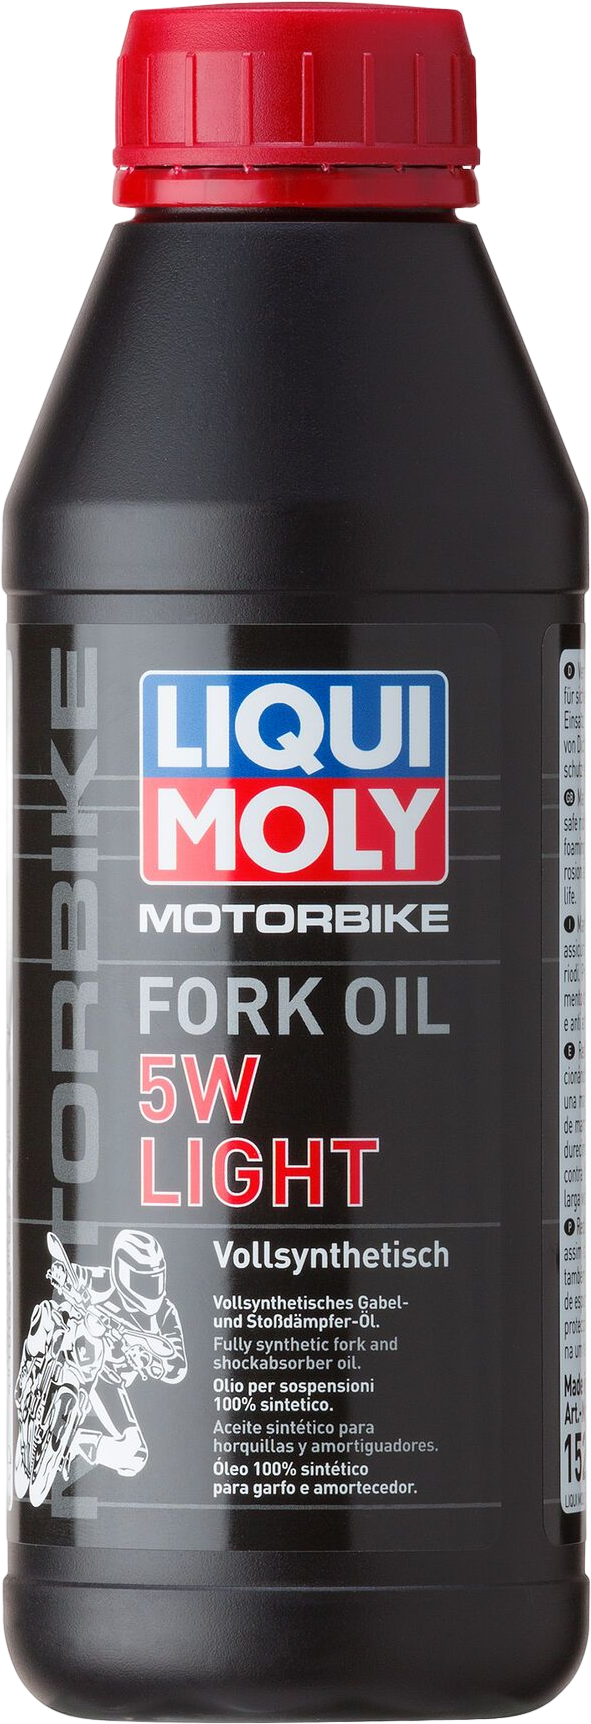 Liqui Moly Motorbike Fork Oil 5W light, 500 ml